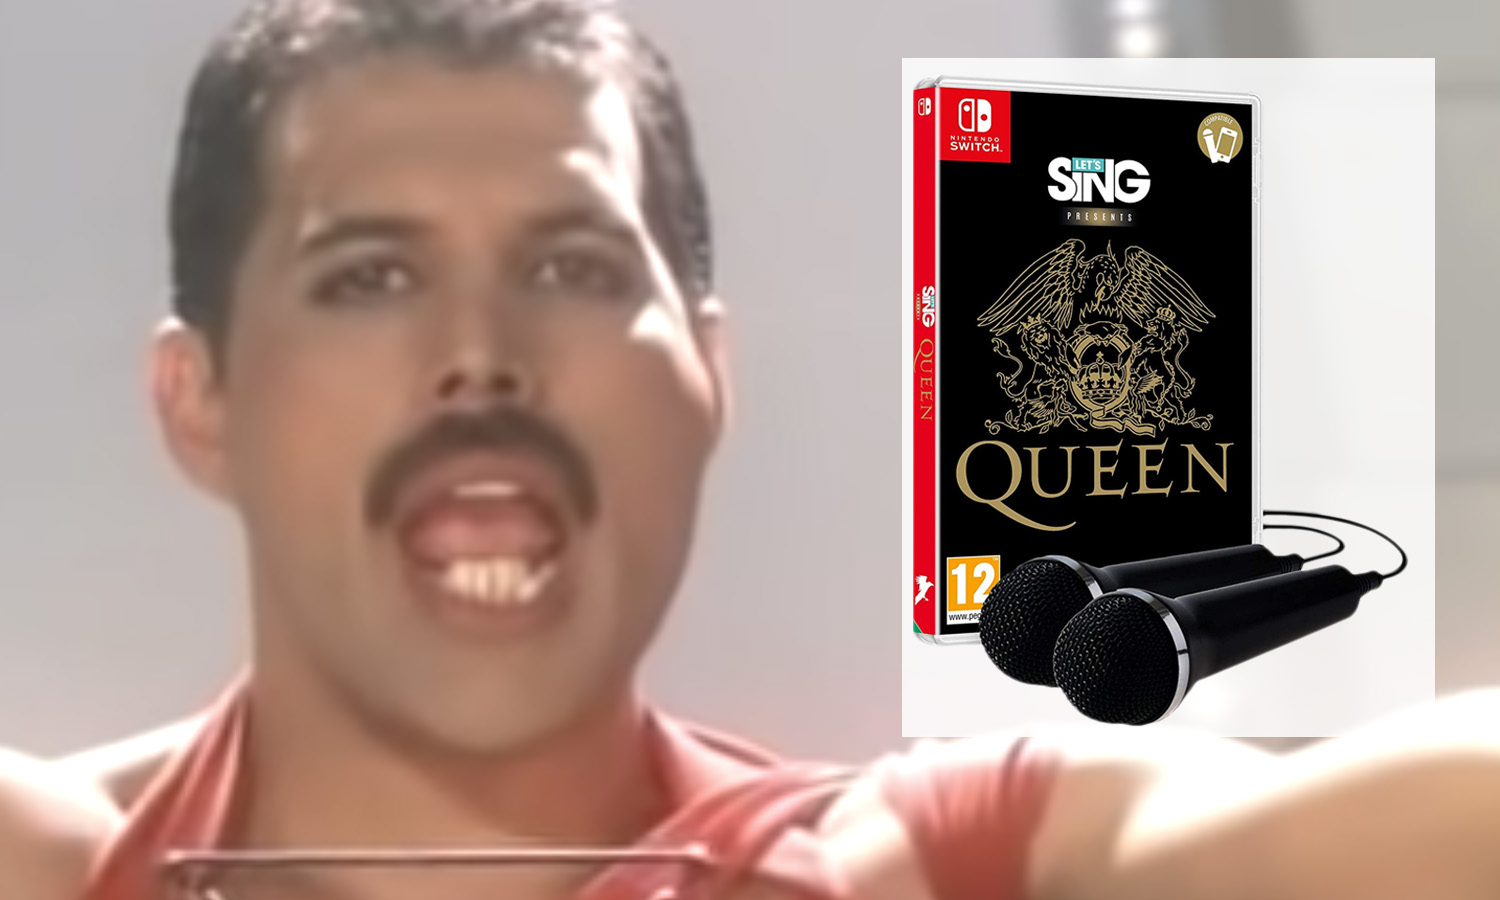 Let's Sing Queen Switch avec 2 Micro : les offres